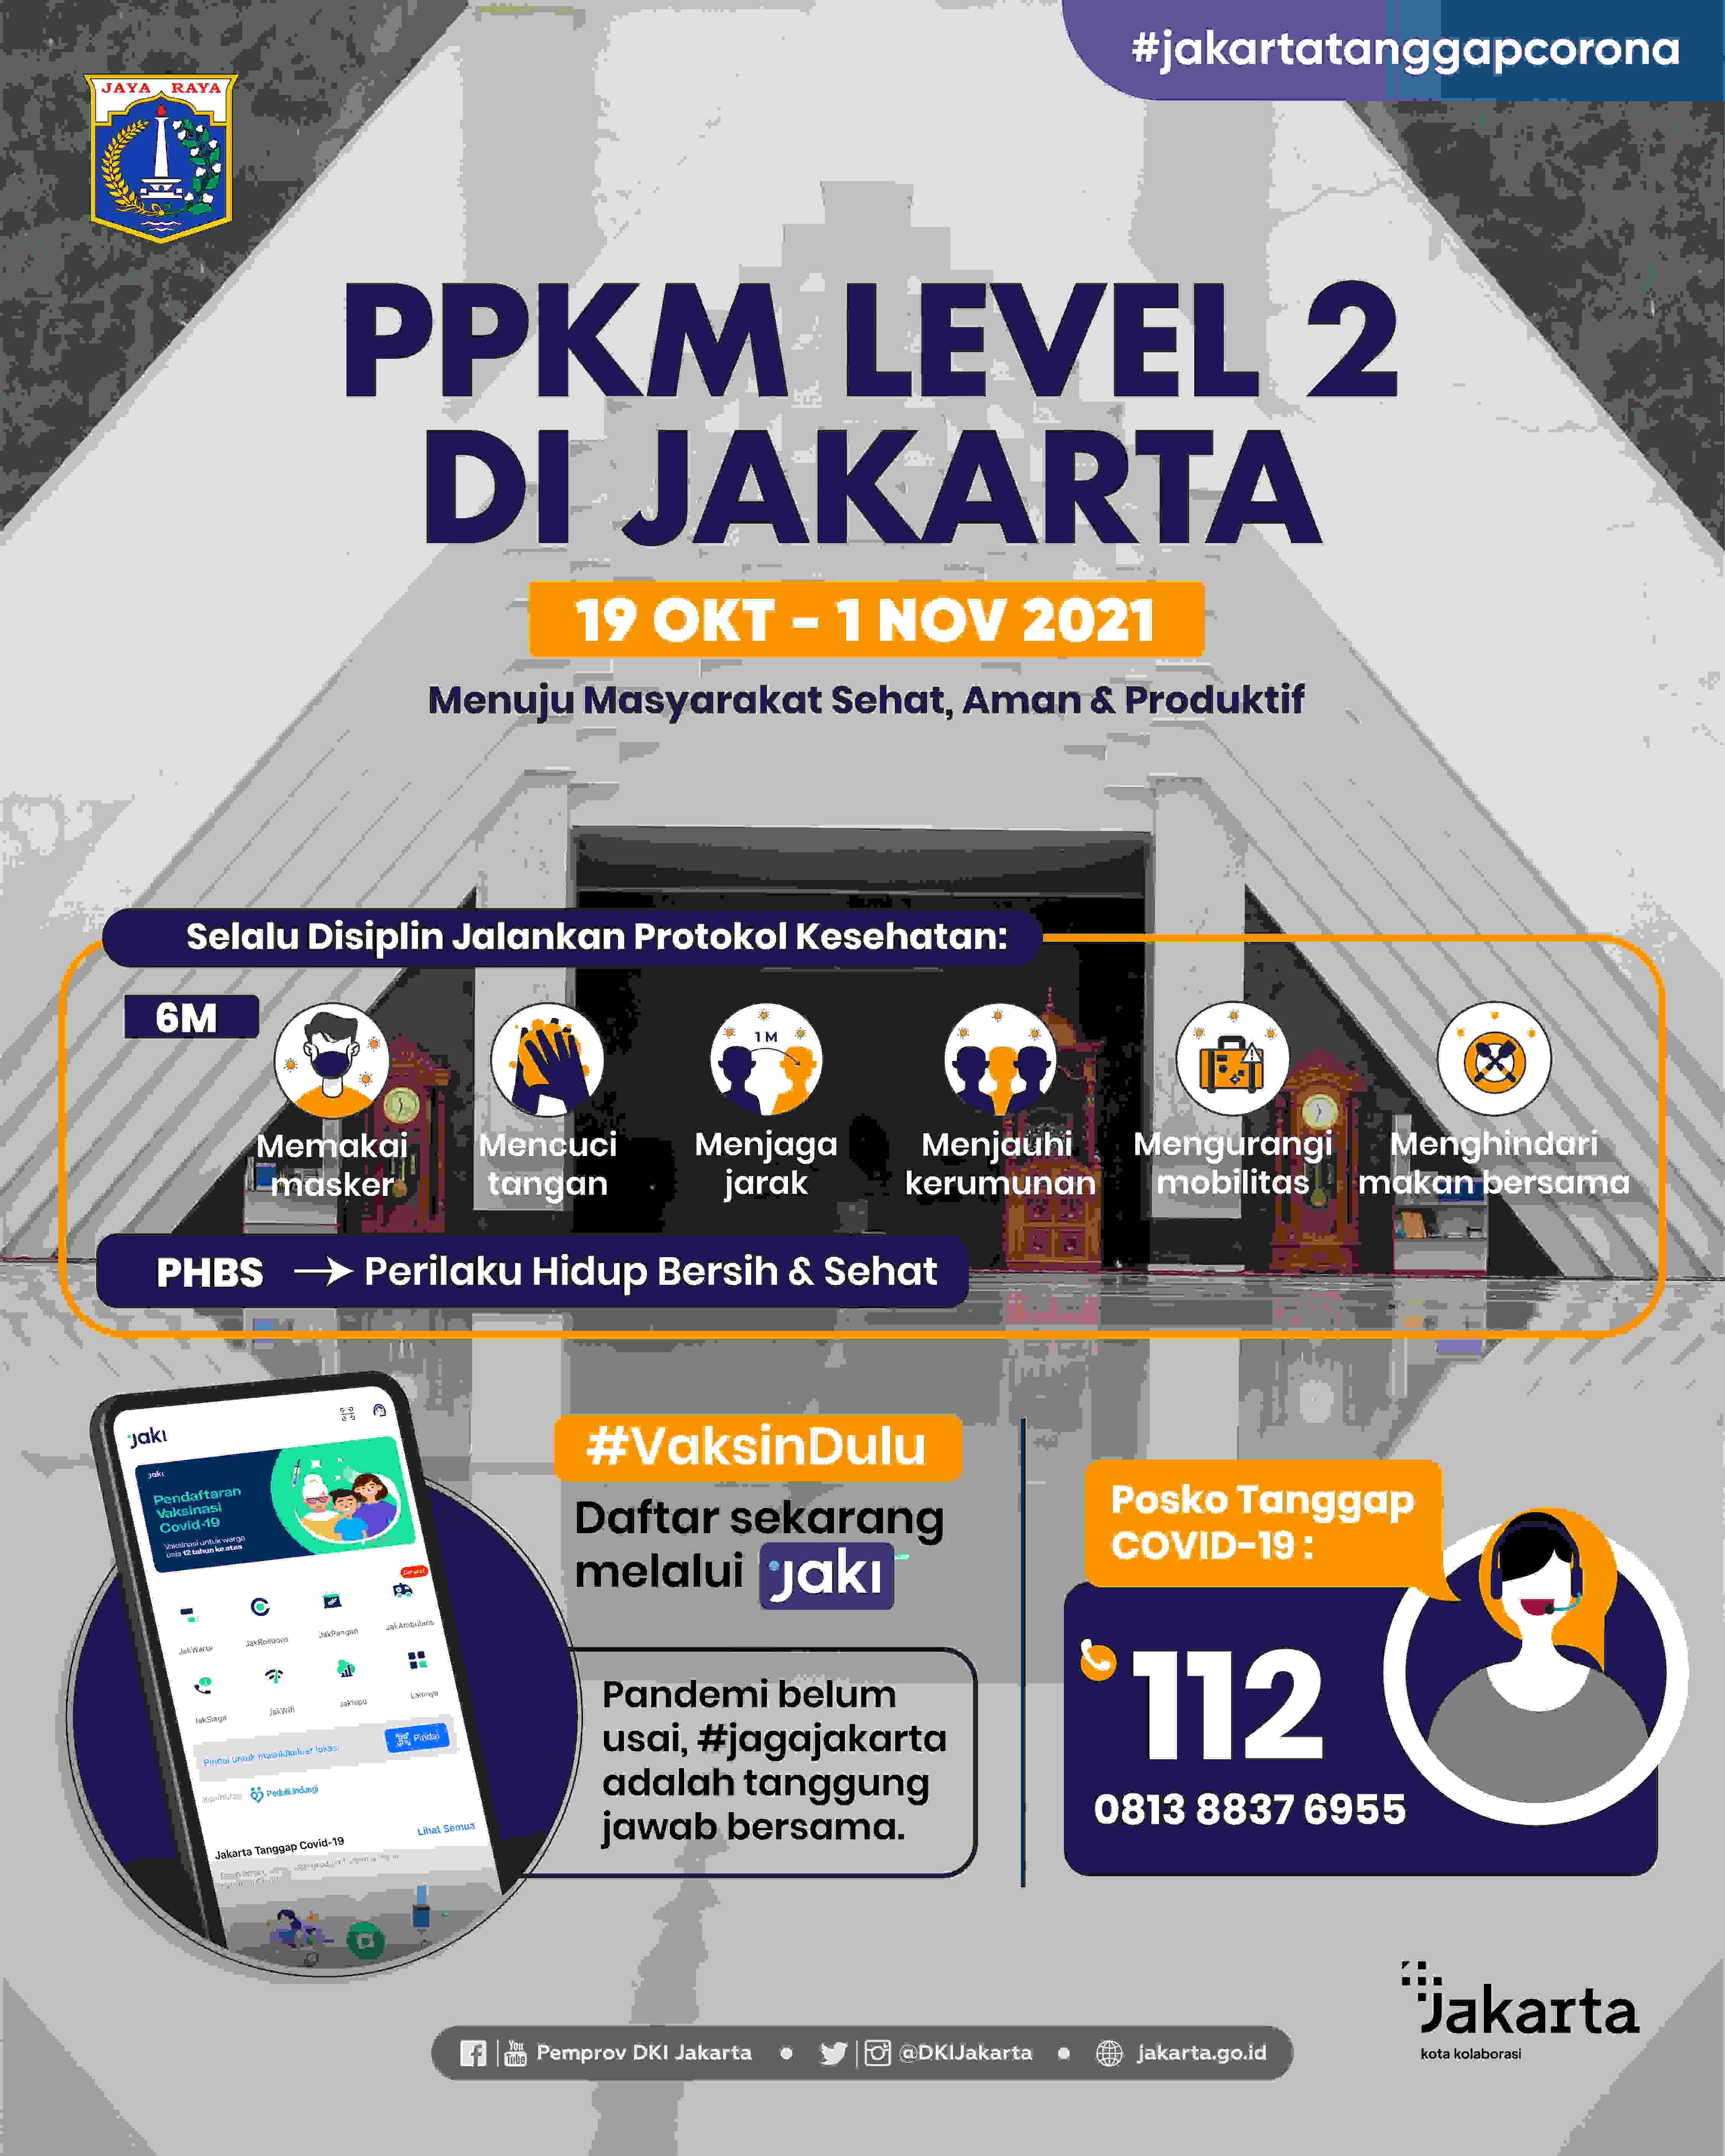 PPKM Level 2 in Jakarta 19 October-1 November 2021